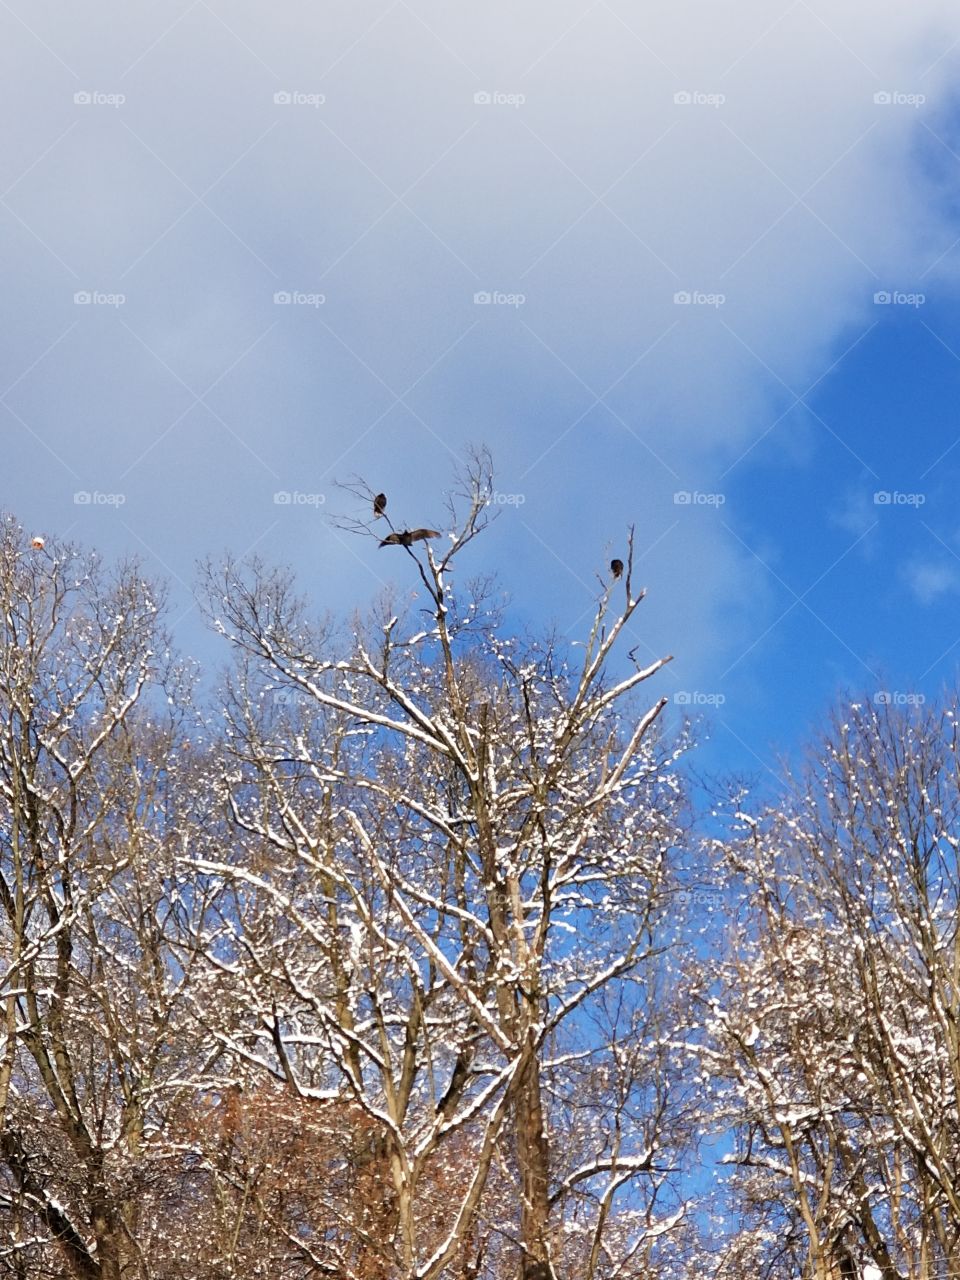 buzzards in the snow